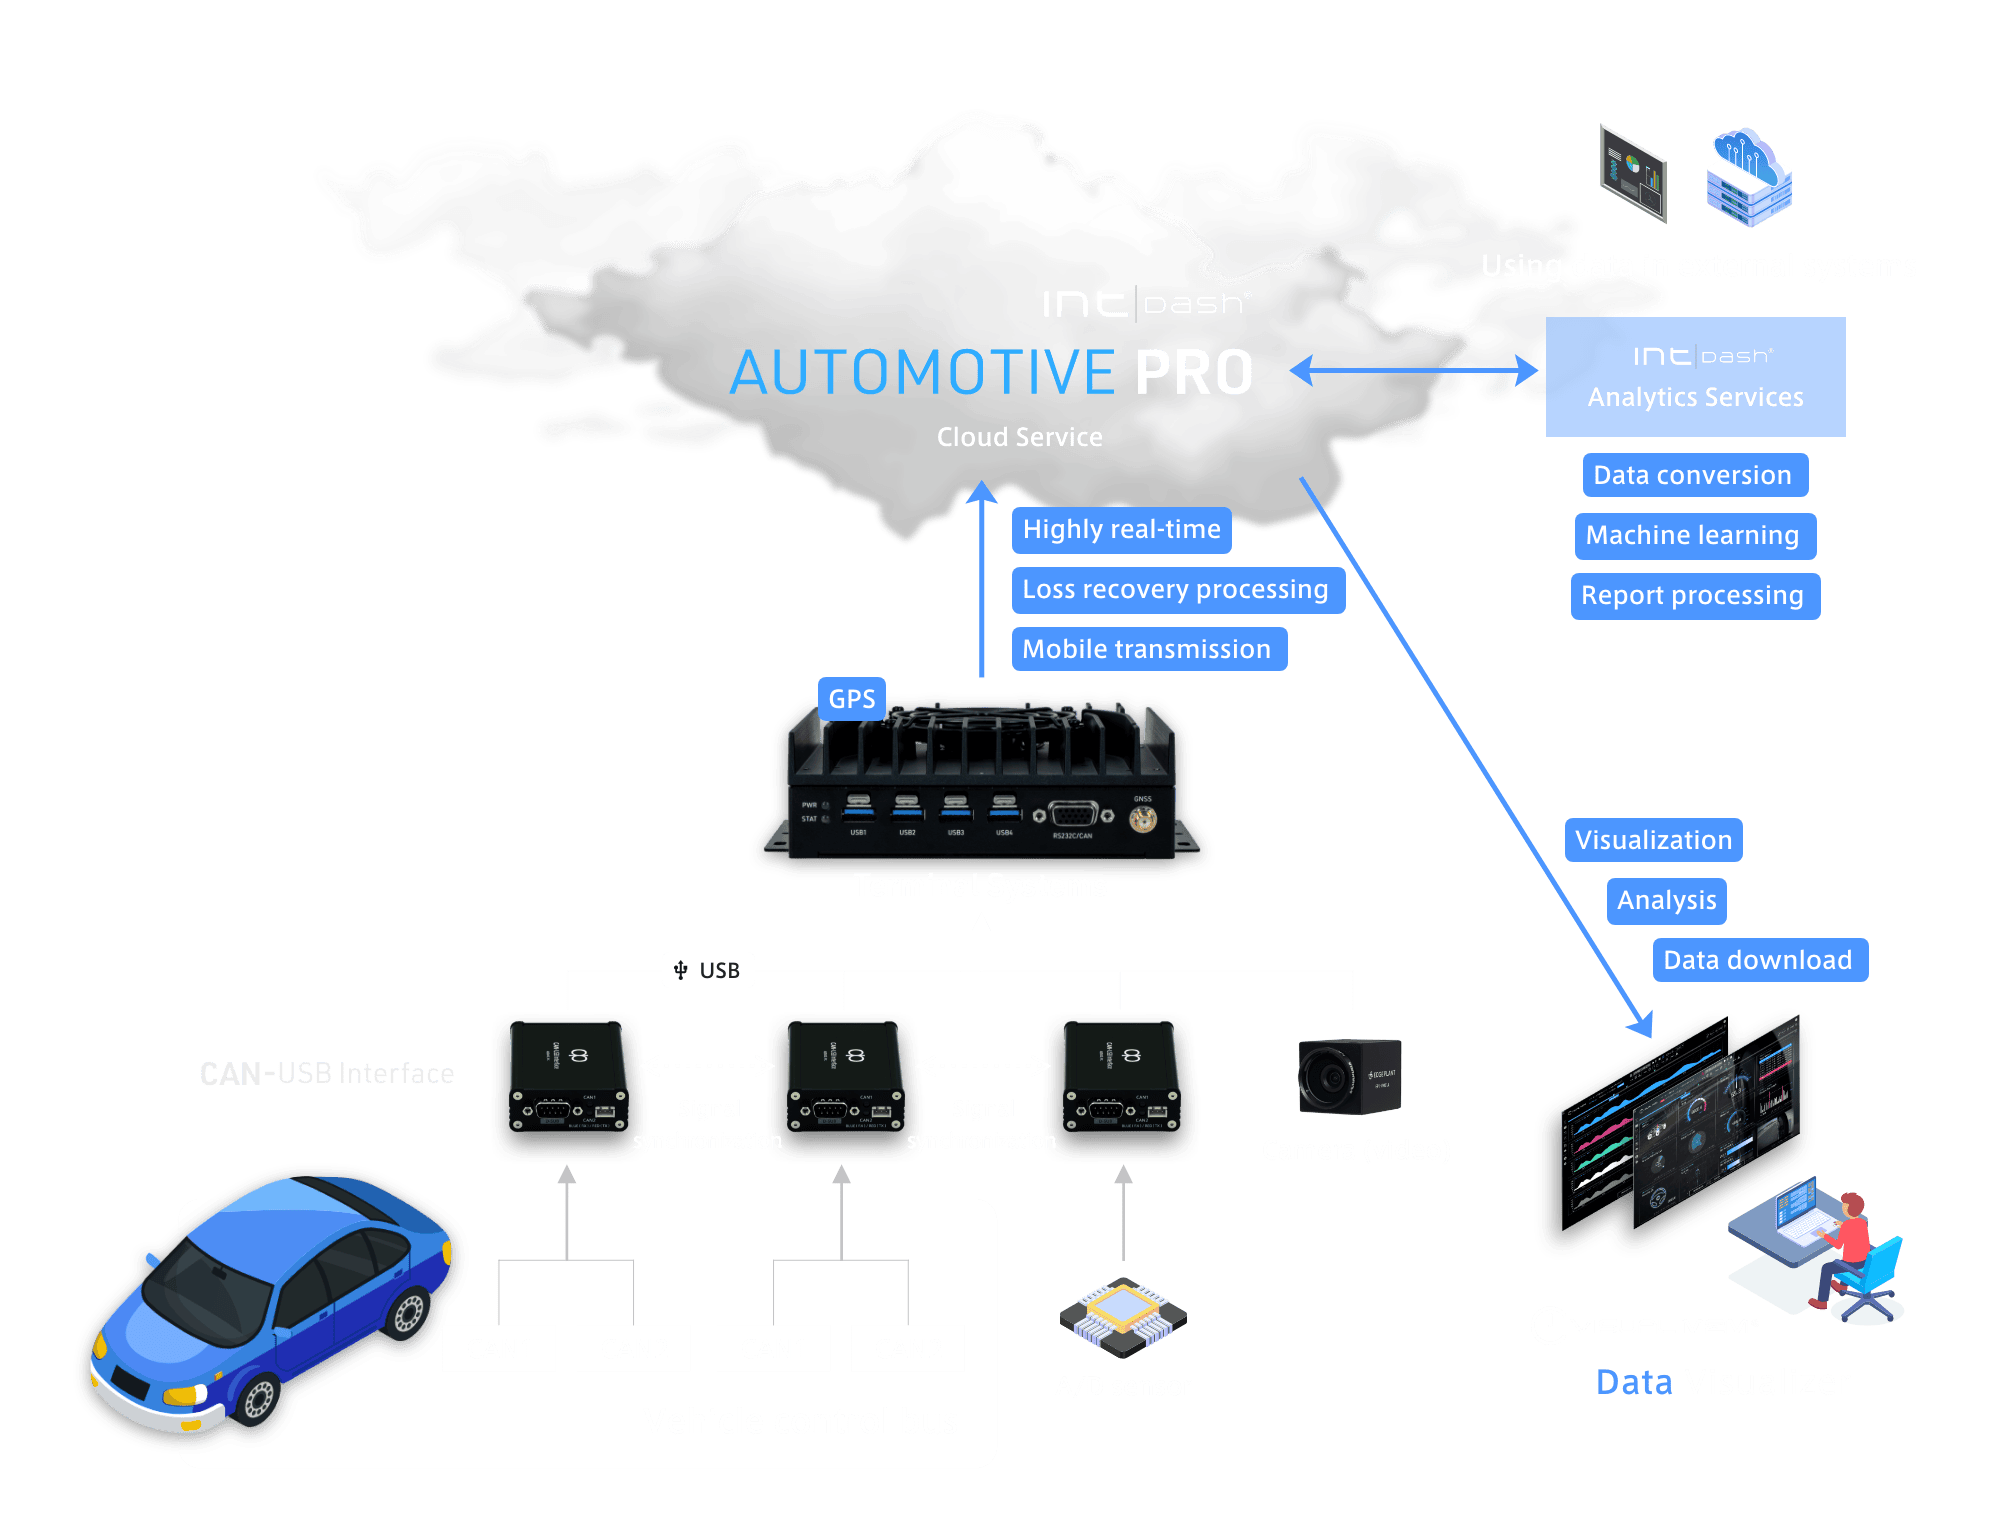 Auto Pro System